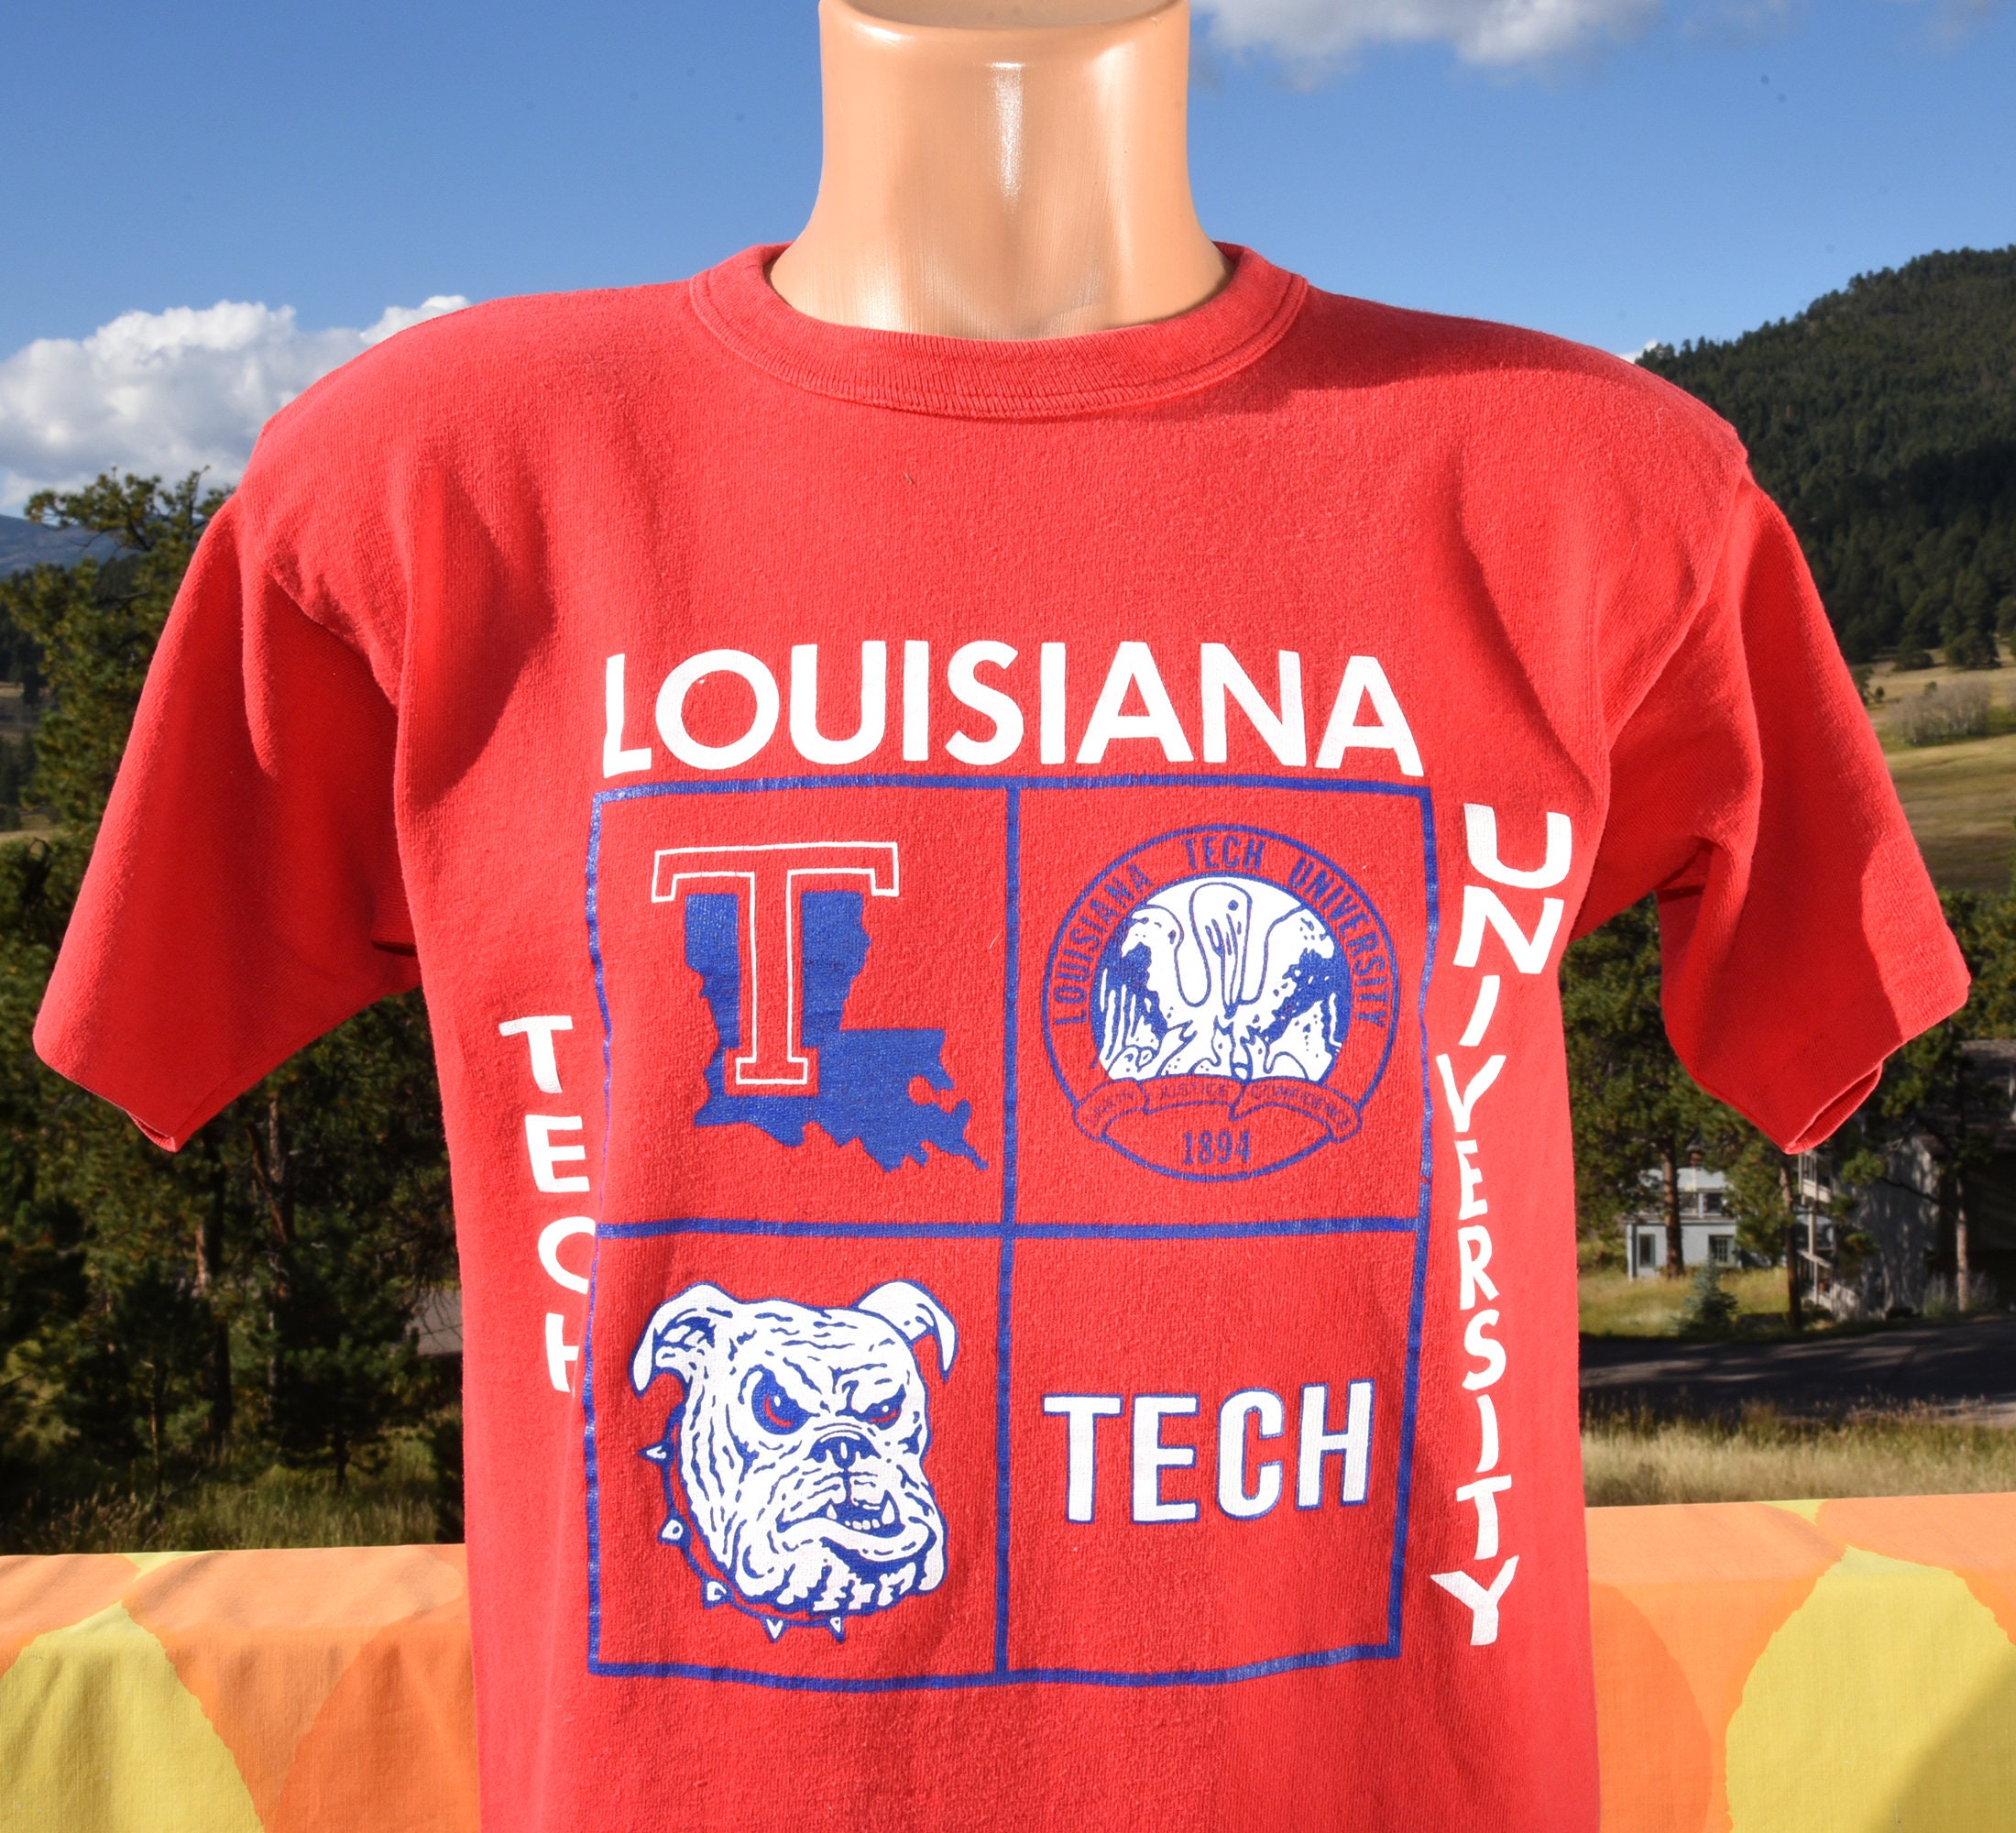 Wear Louisiana: Louisiana shirts, Gameday shirts, Boot Life Shirts, Hooked  on Louisiana Shirts, Snake Life shirts